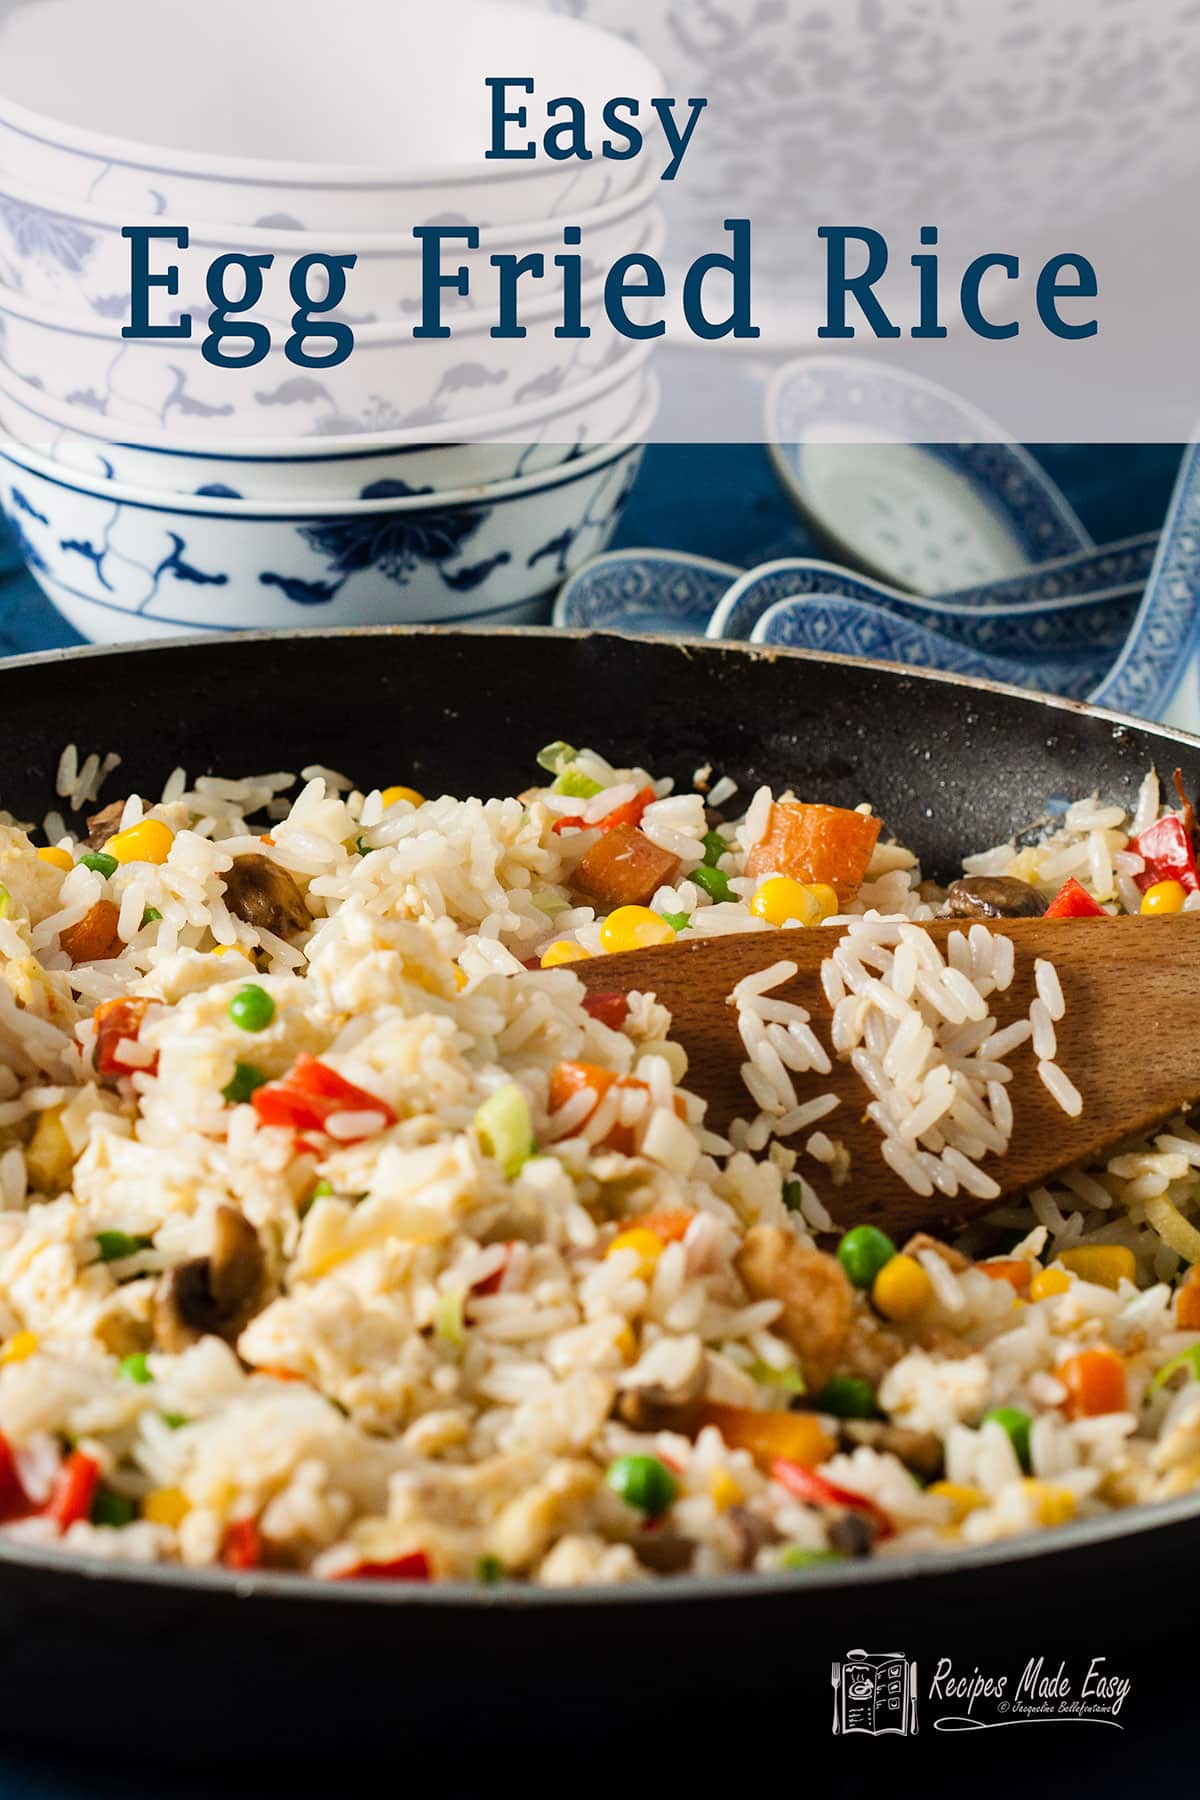 Easy egg fried rice | Recipes Made Easy